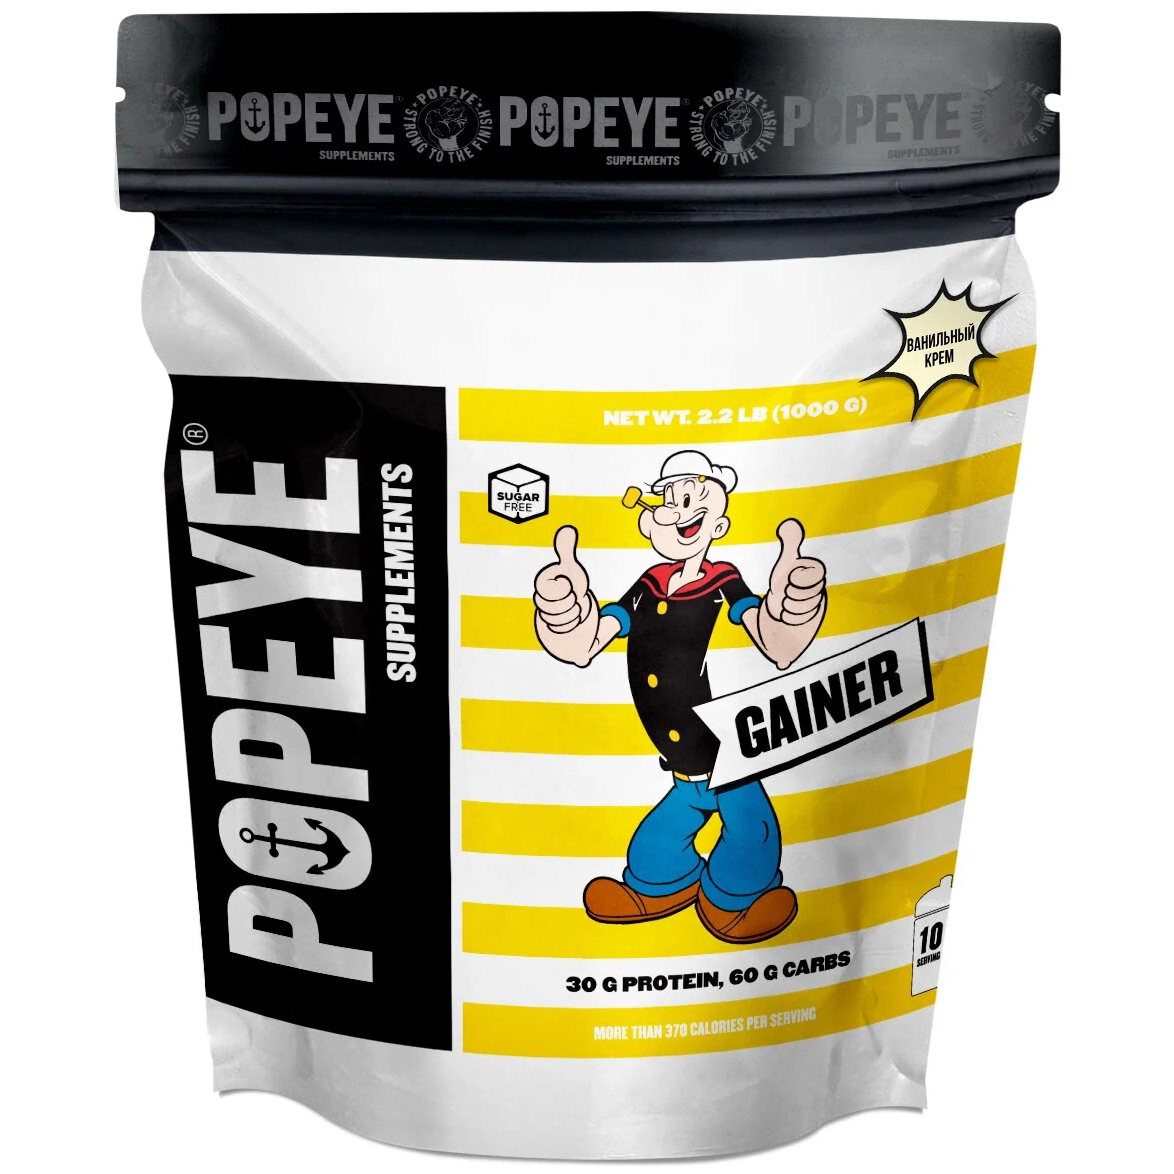 Гейнер, Popeye Supplements Gainer - 1000 грамм, ванильный крем